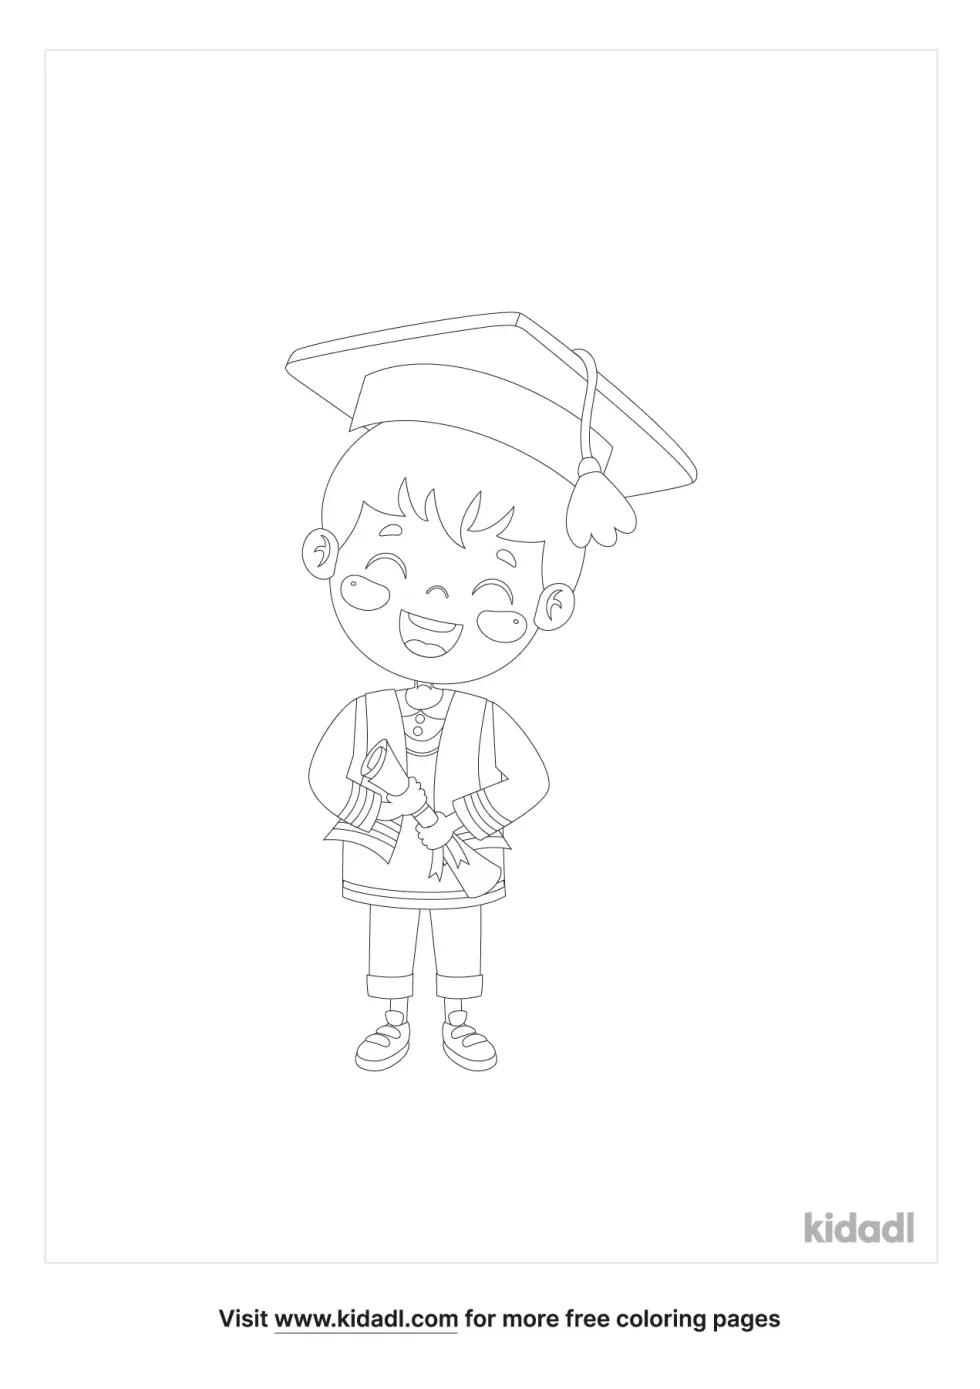 Graduation Child With Parchment Coloring Page